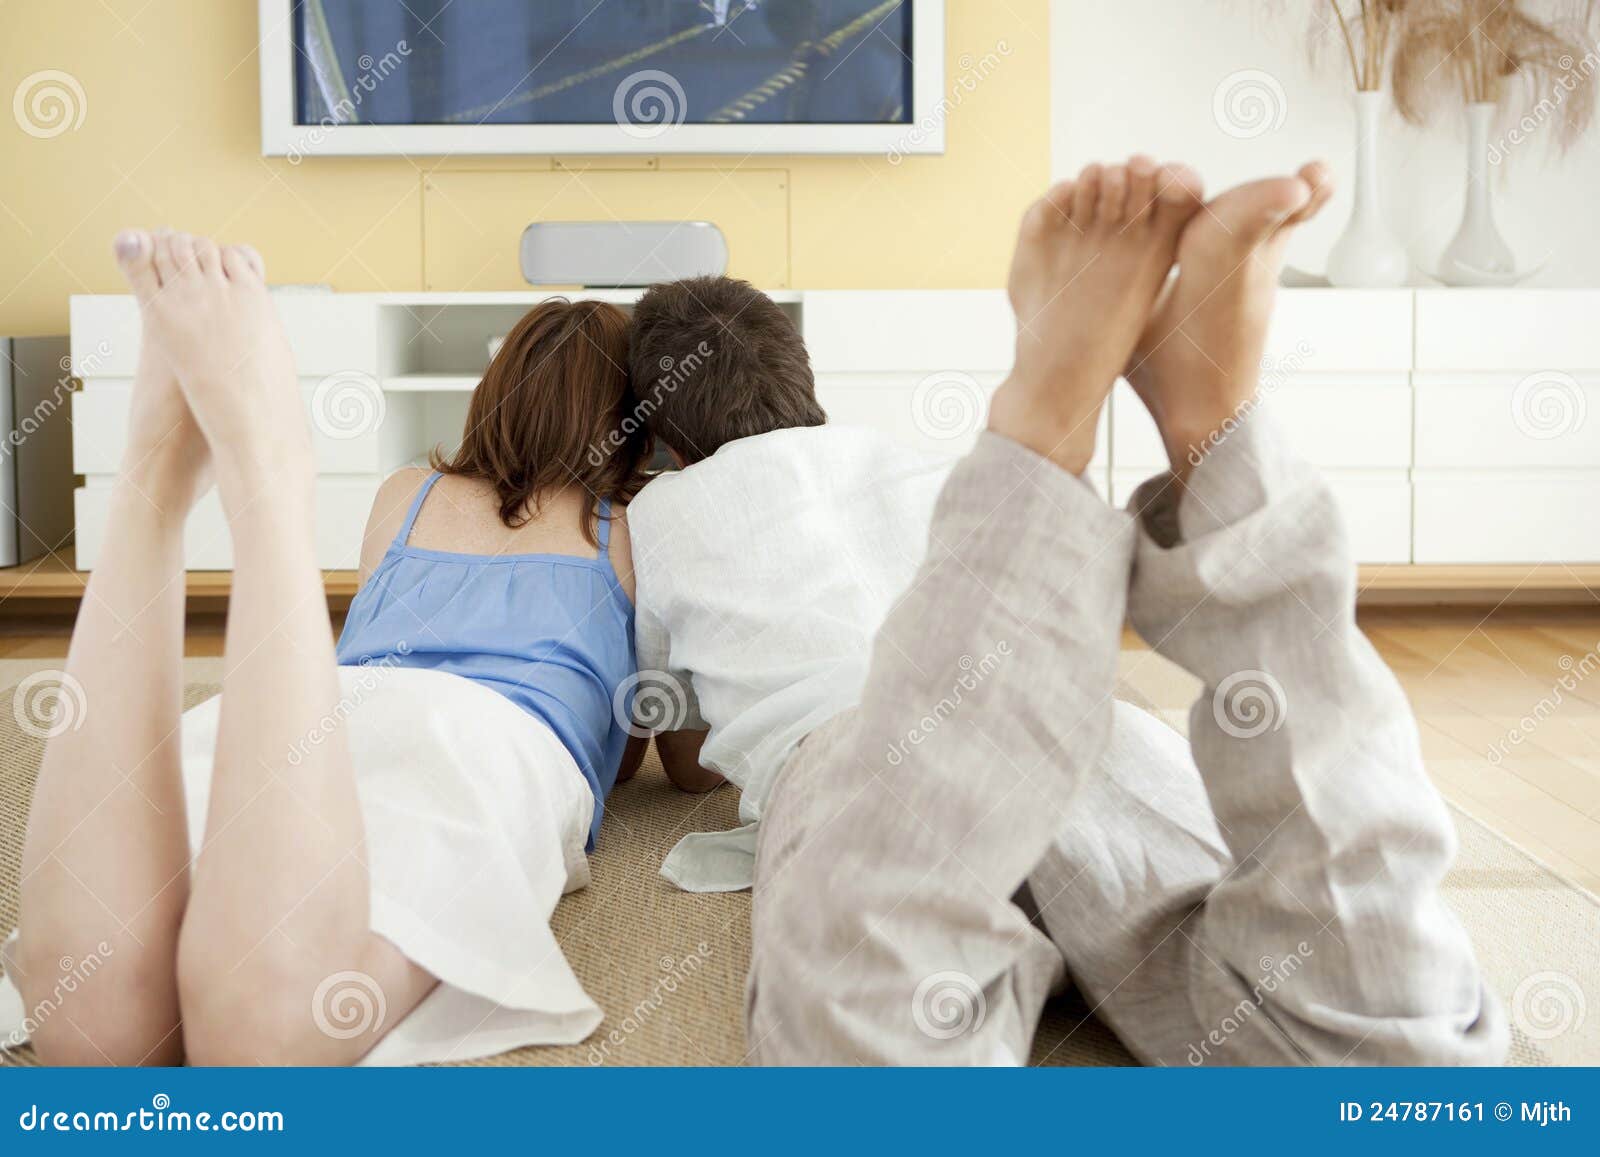 Two Laying Down On Floor Watching TV Stock Image Image of girlfriend, floor 24787161